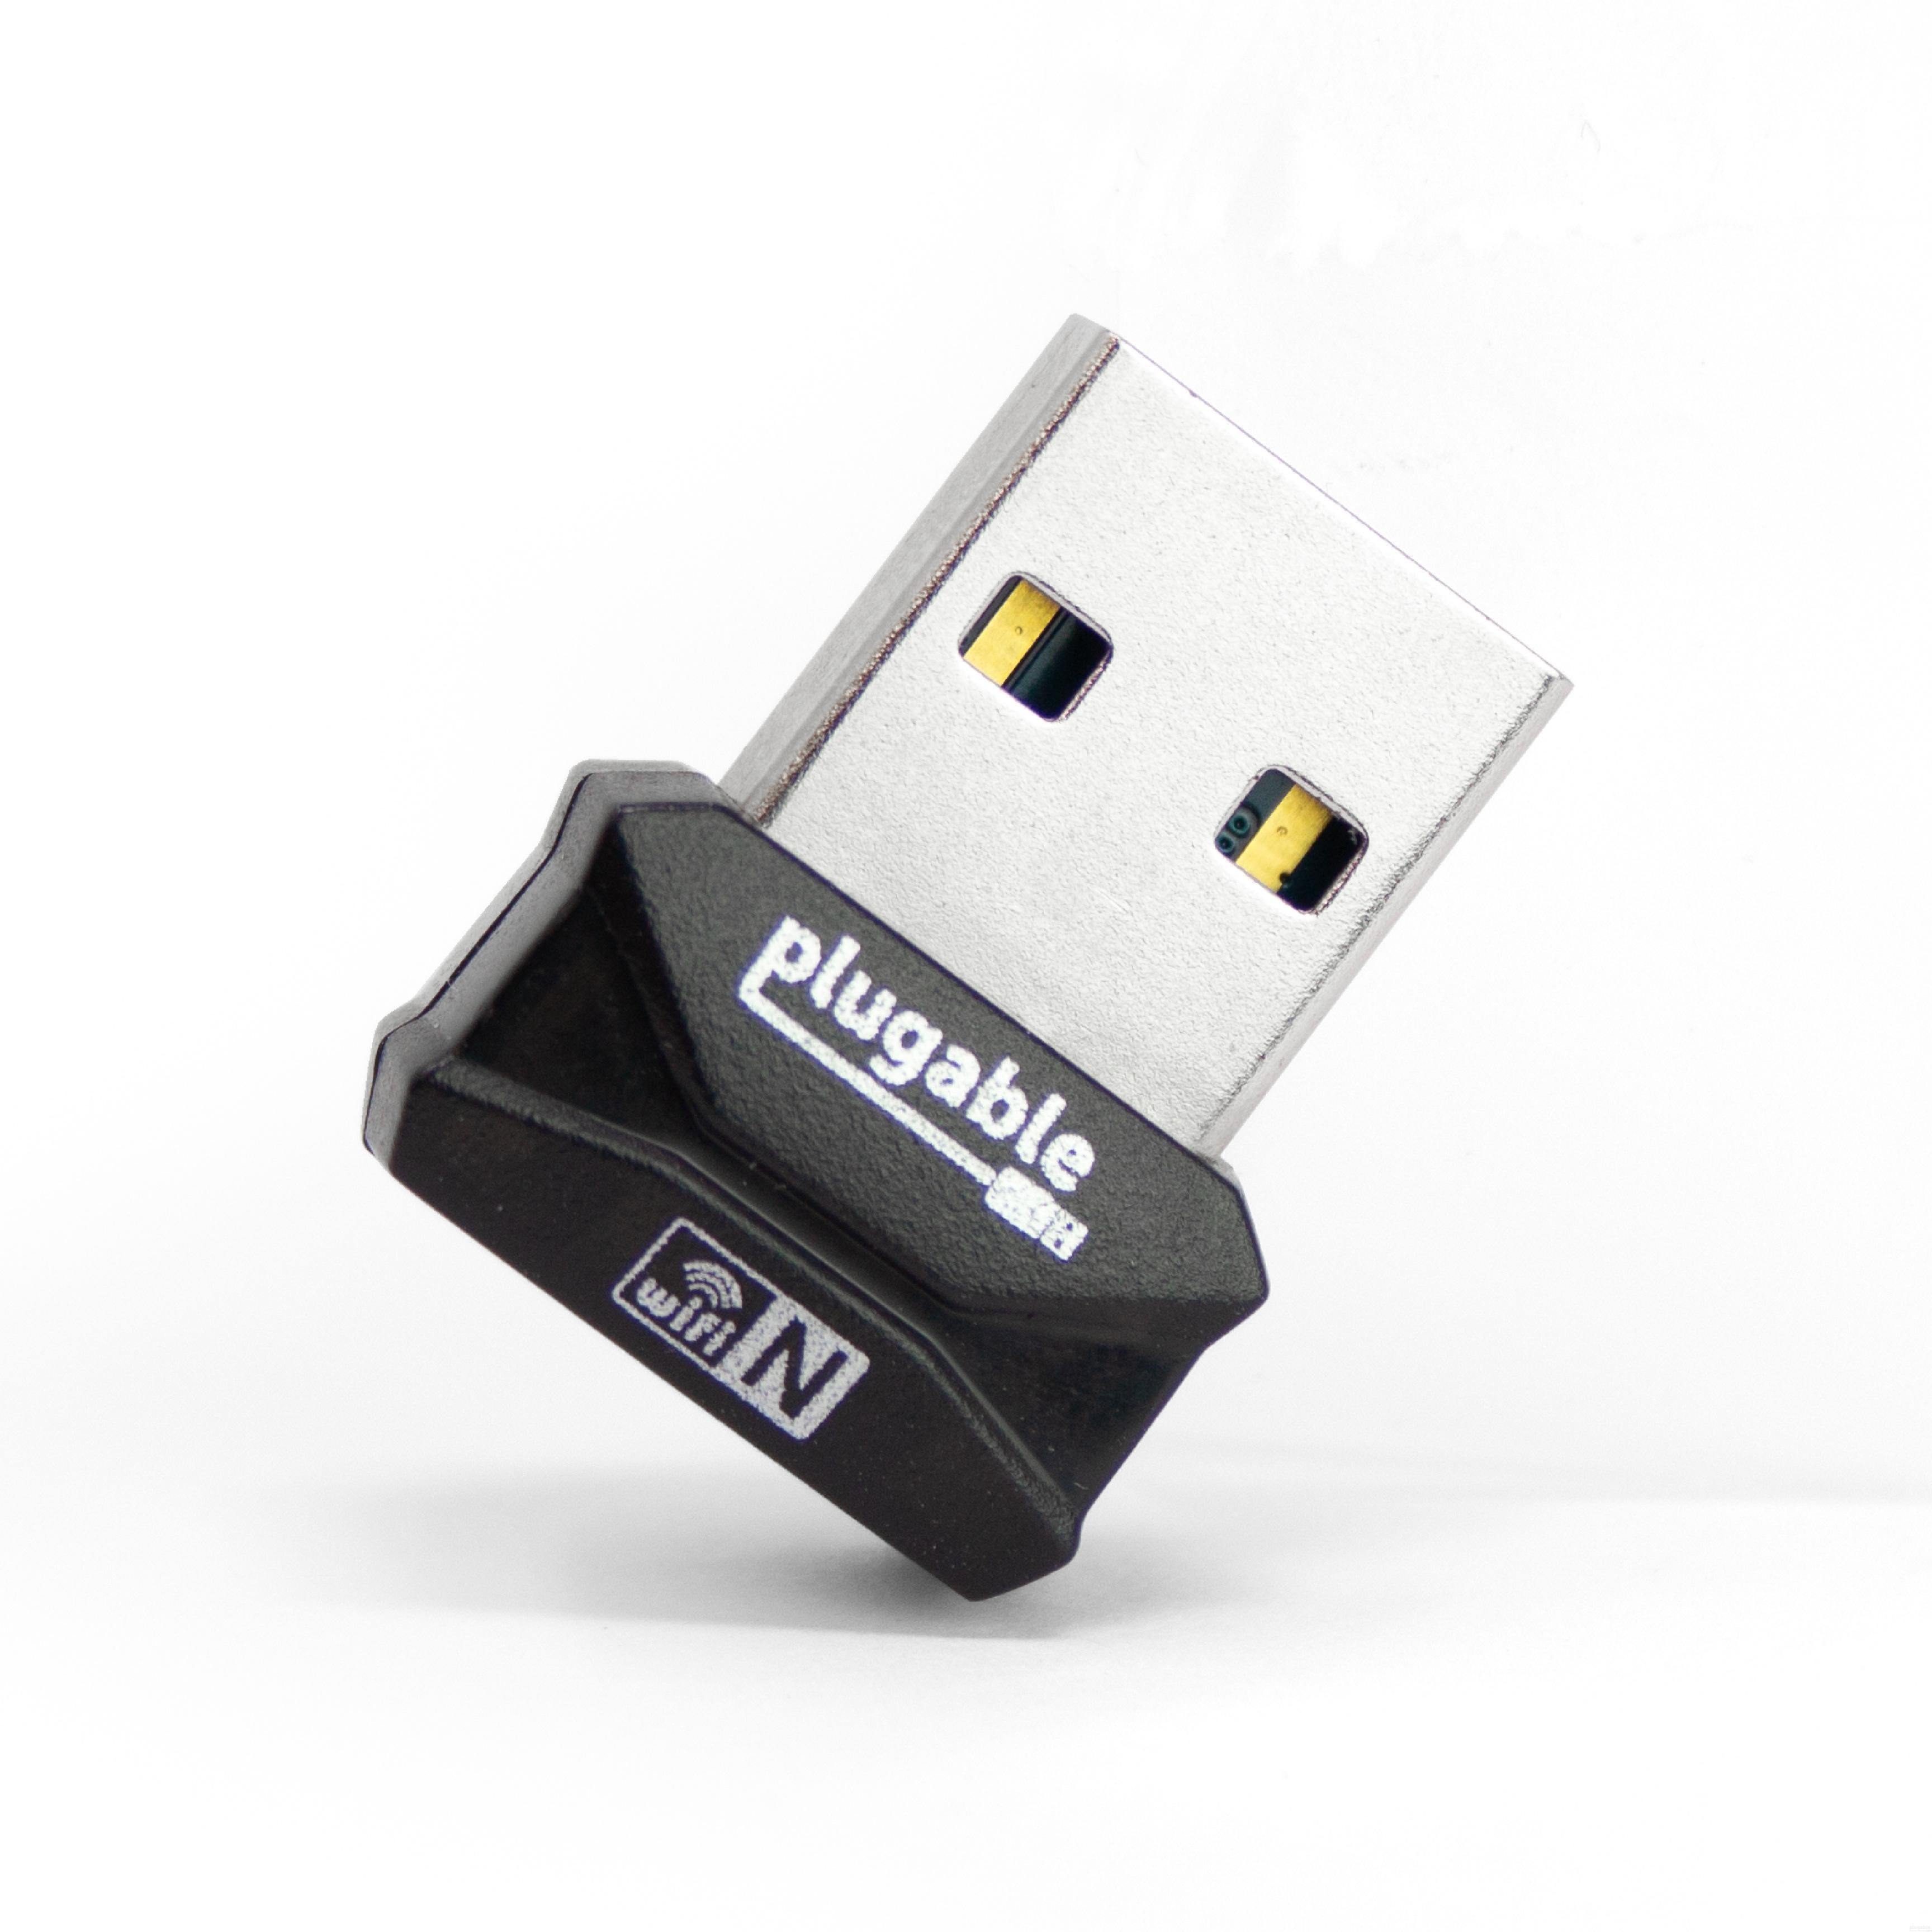 Plugable USB 2.0 802.11n Wireless – Technologies